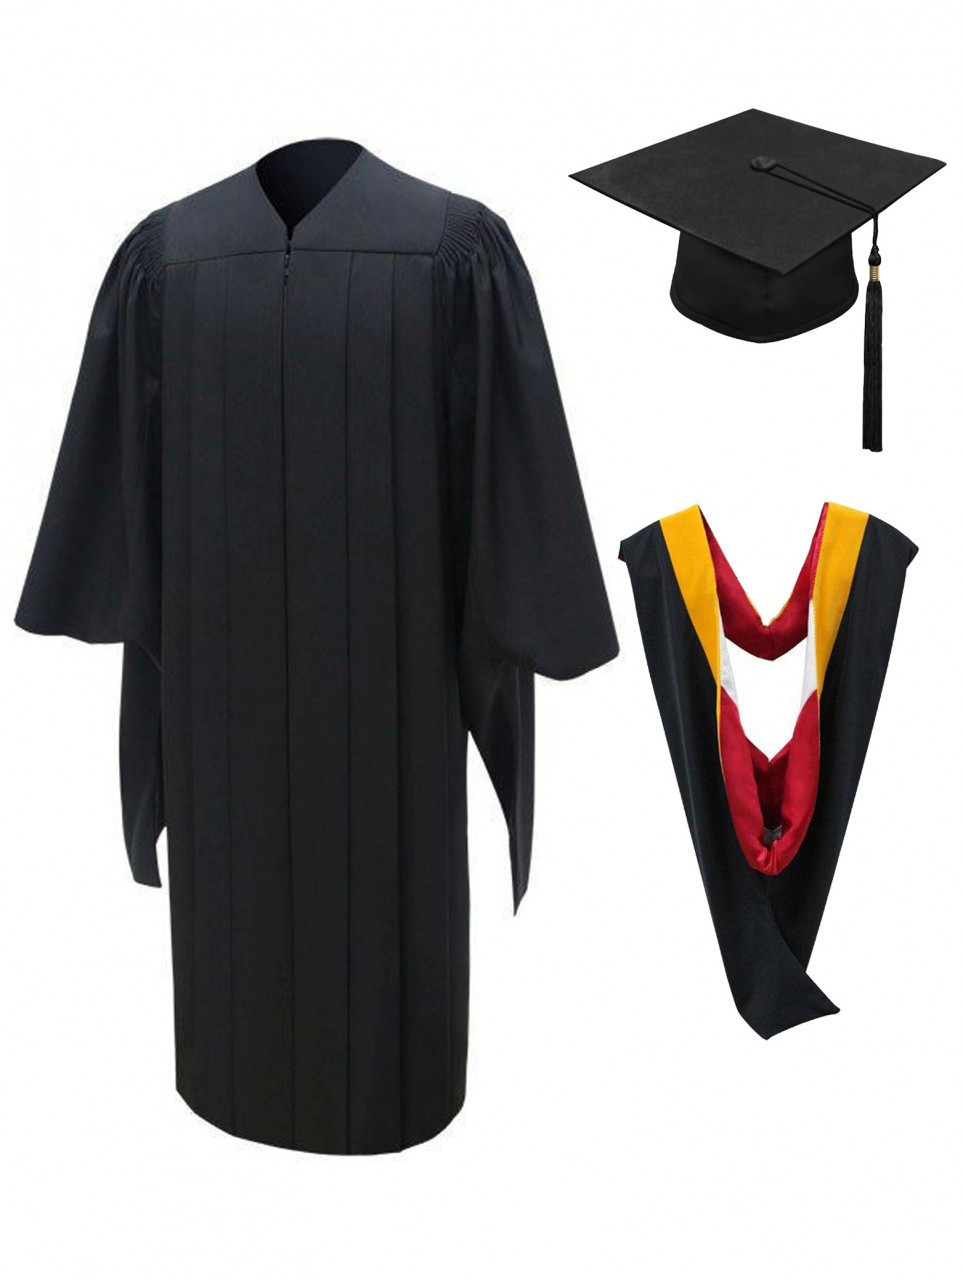 Shop Graduation Caps & Gowns - College, High School, Preschool